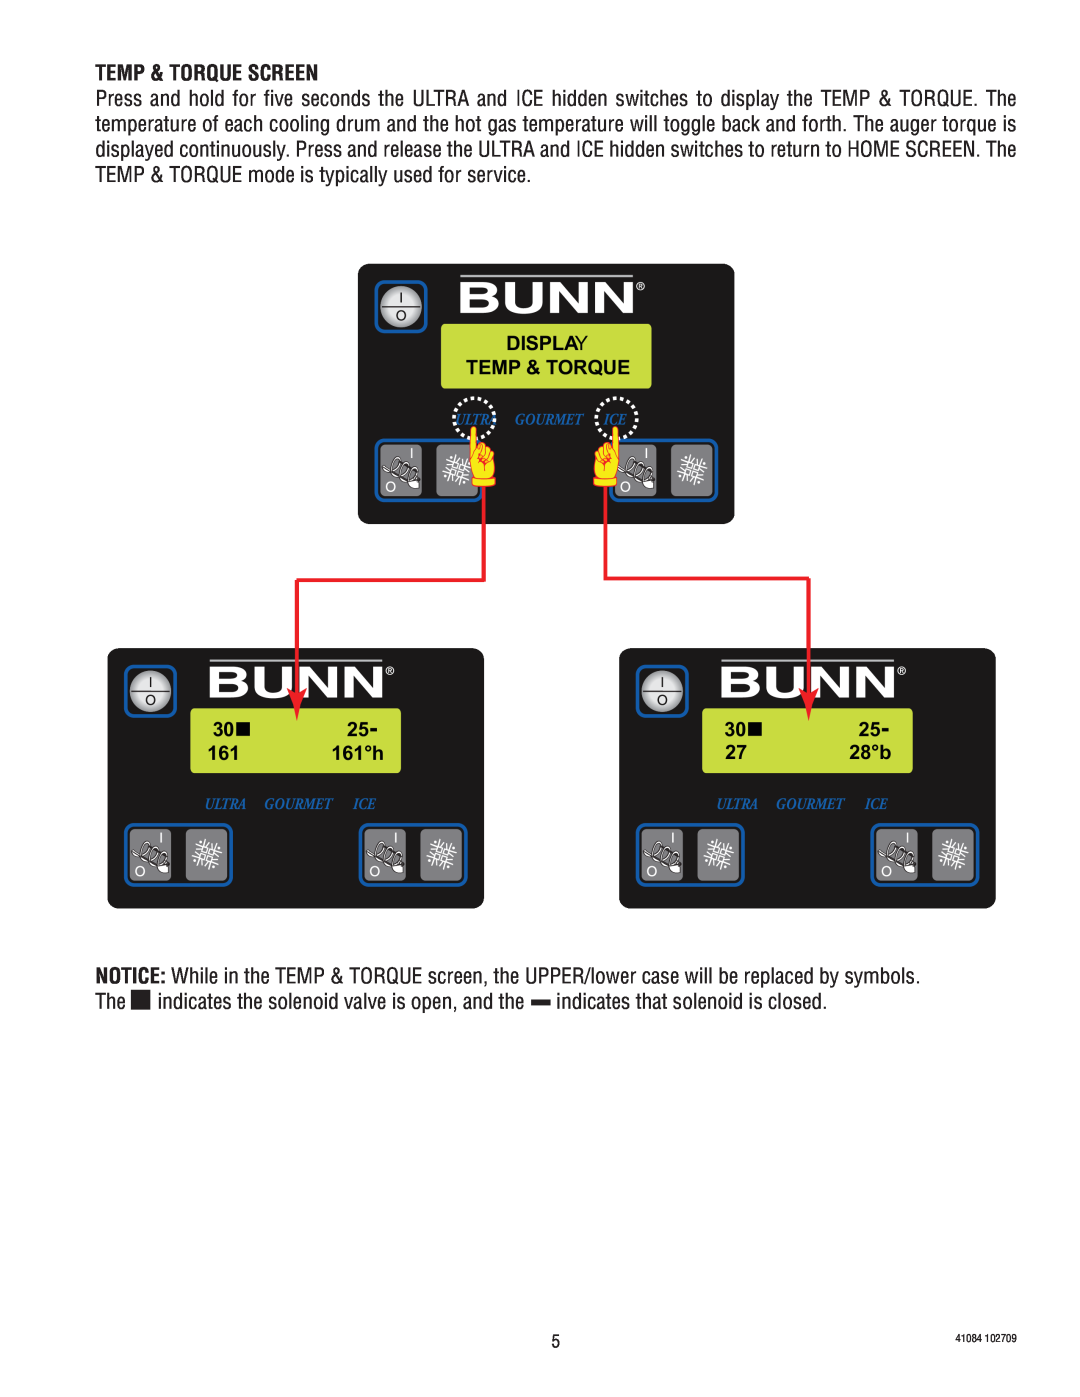 Bunn ULTRA-1 manual Temp & Torque Screen, Display Temp & Torque, 161h 